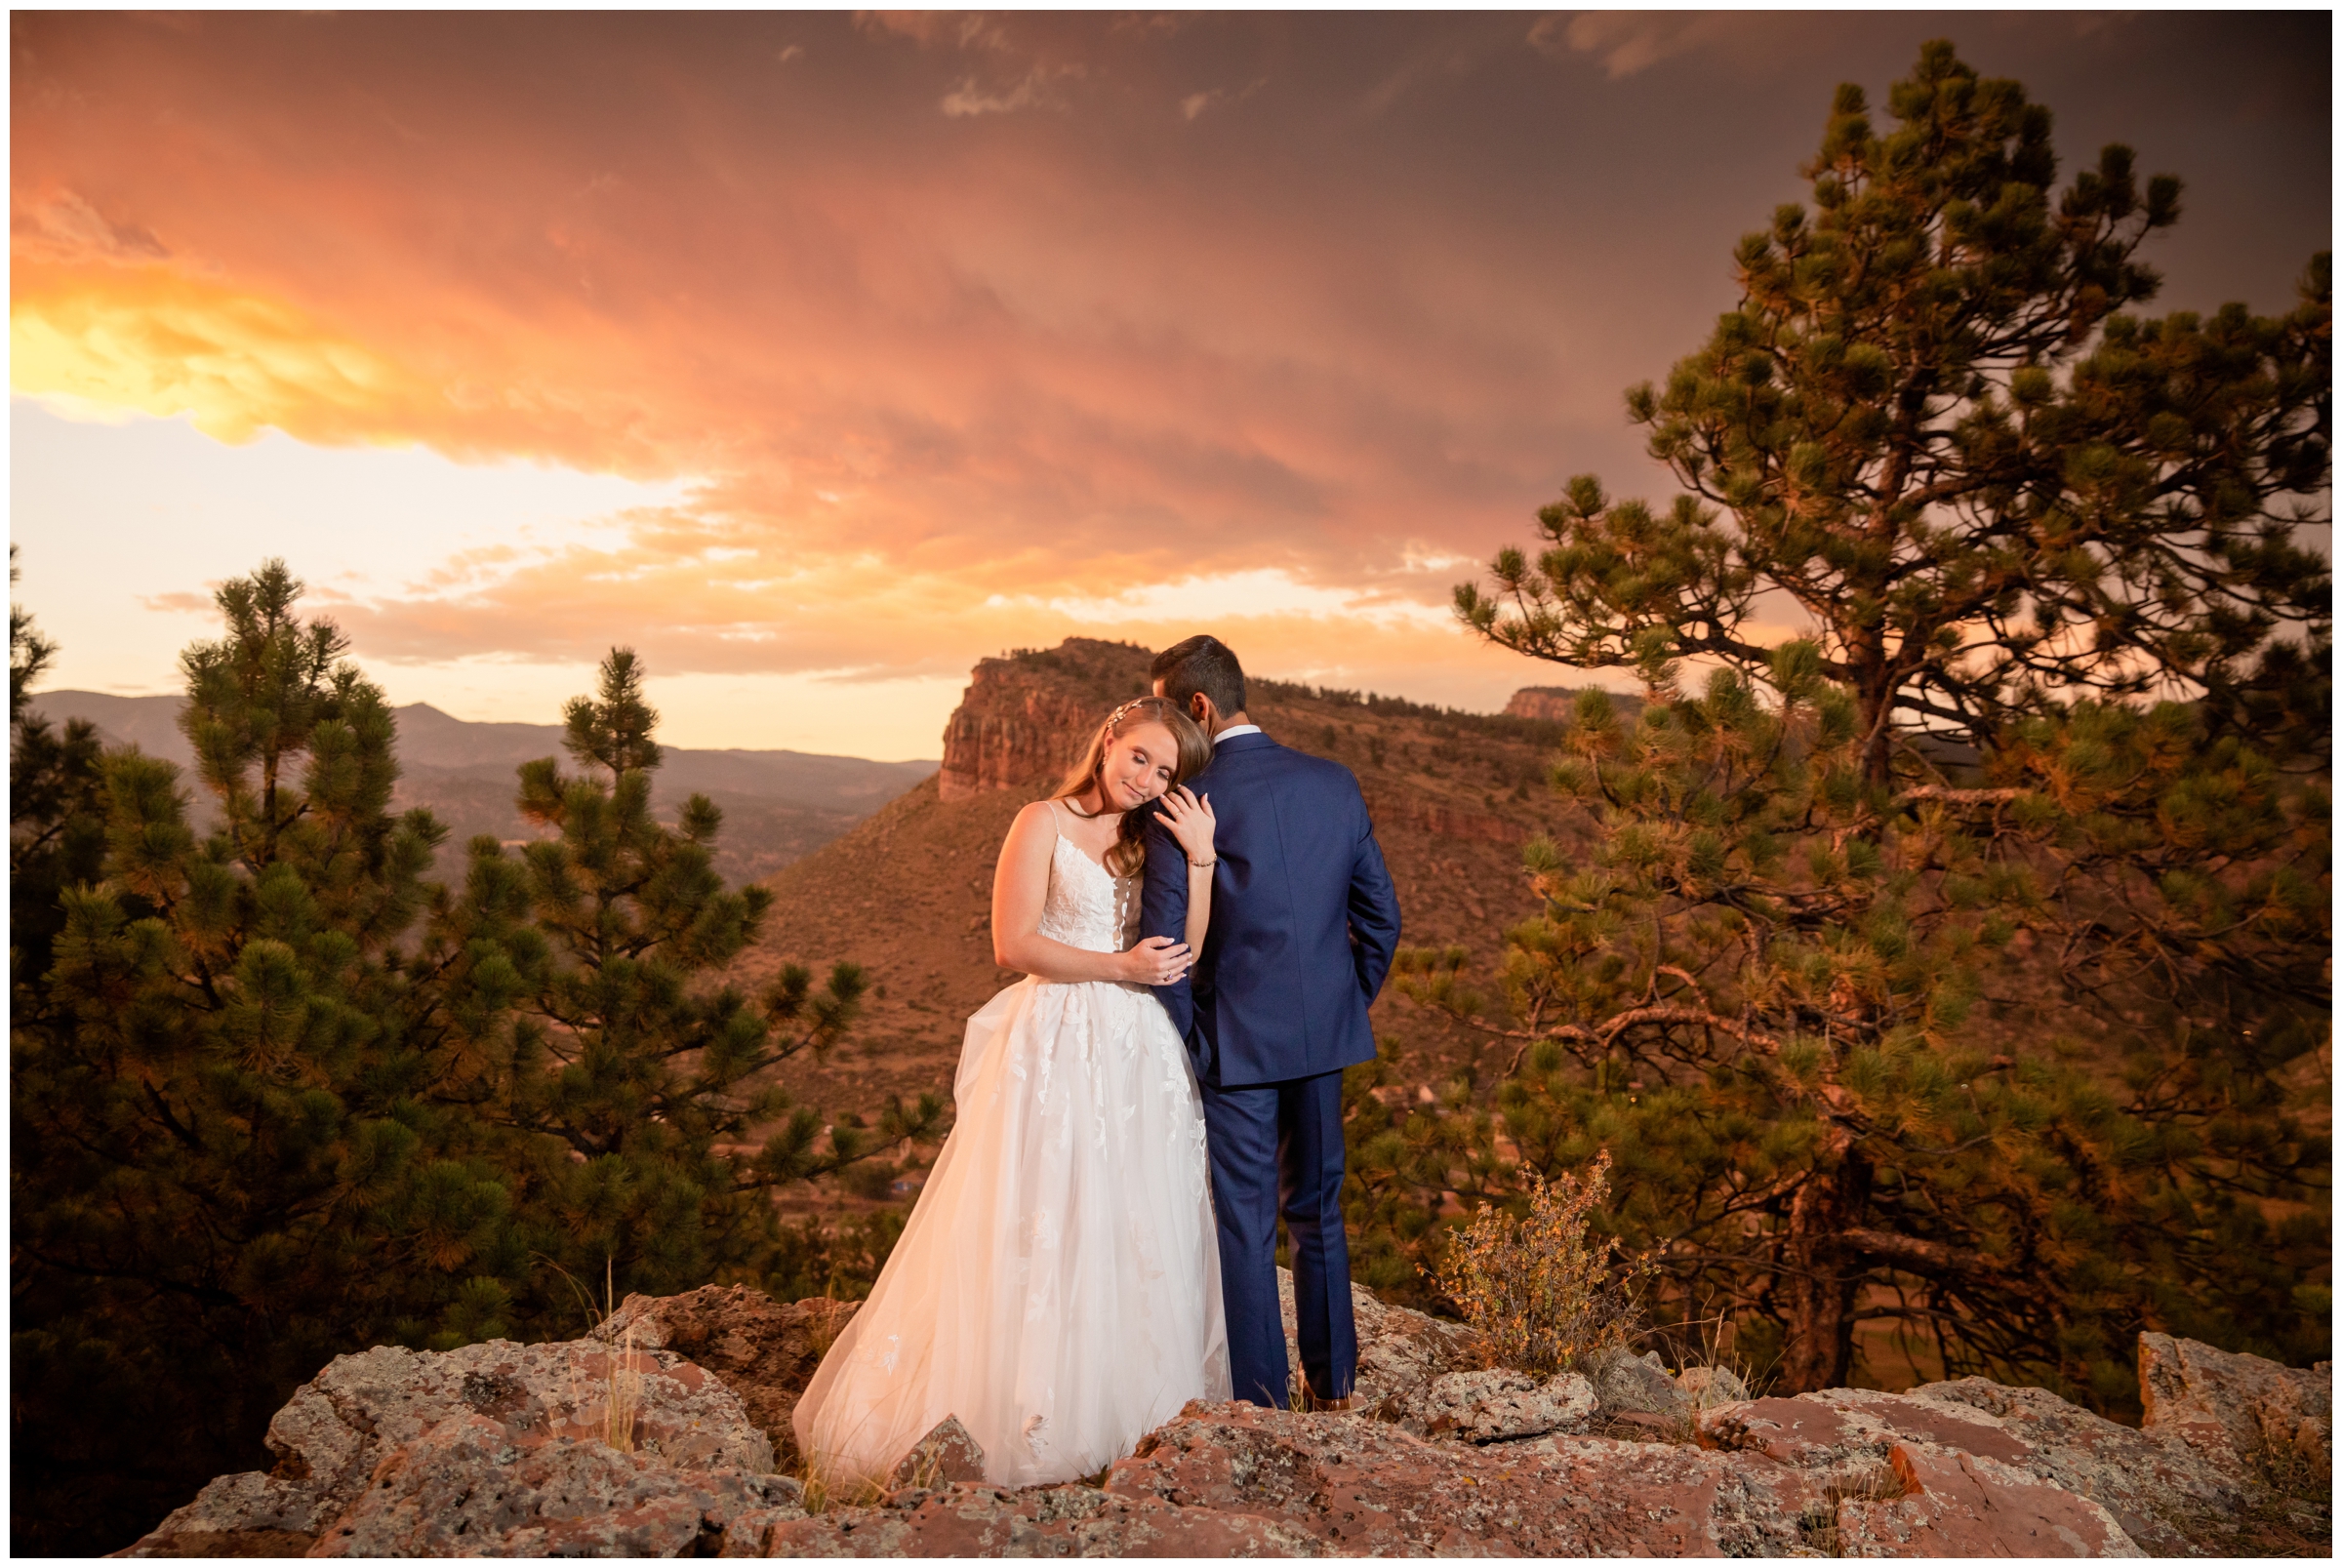 Lionscrest Manor wedding inspiration by Colorado mountain photographer Plum Pretty Photography